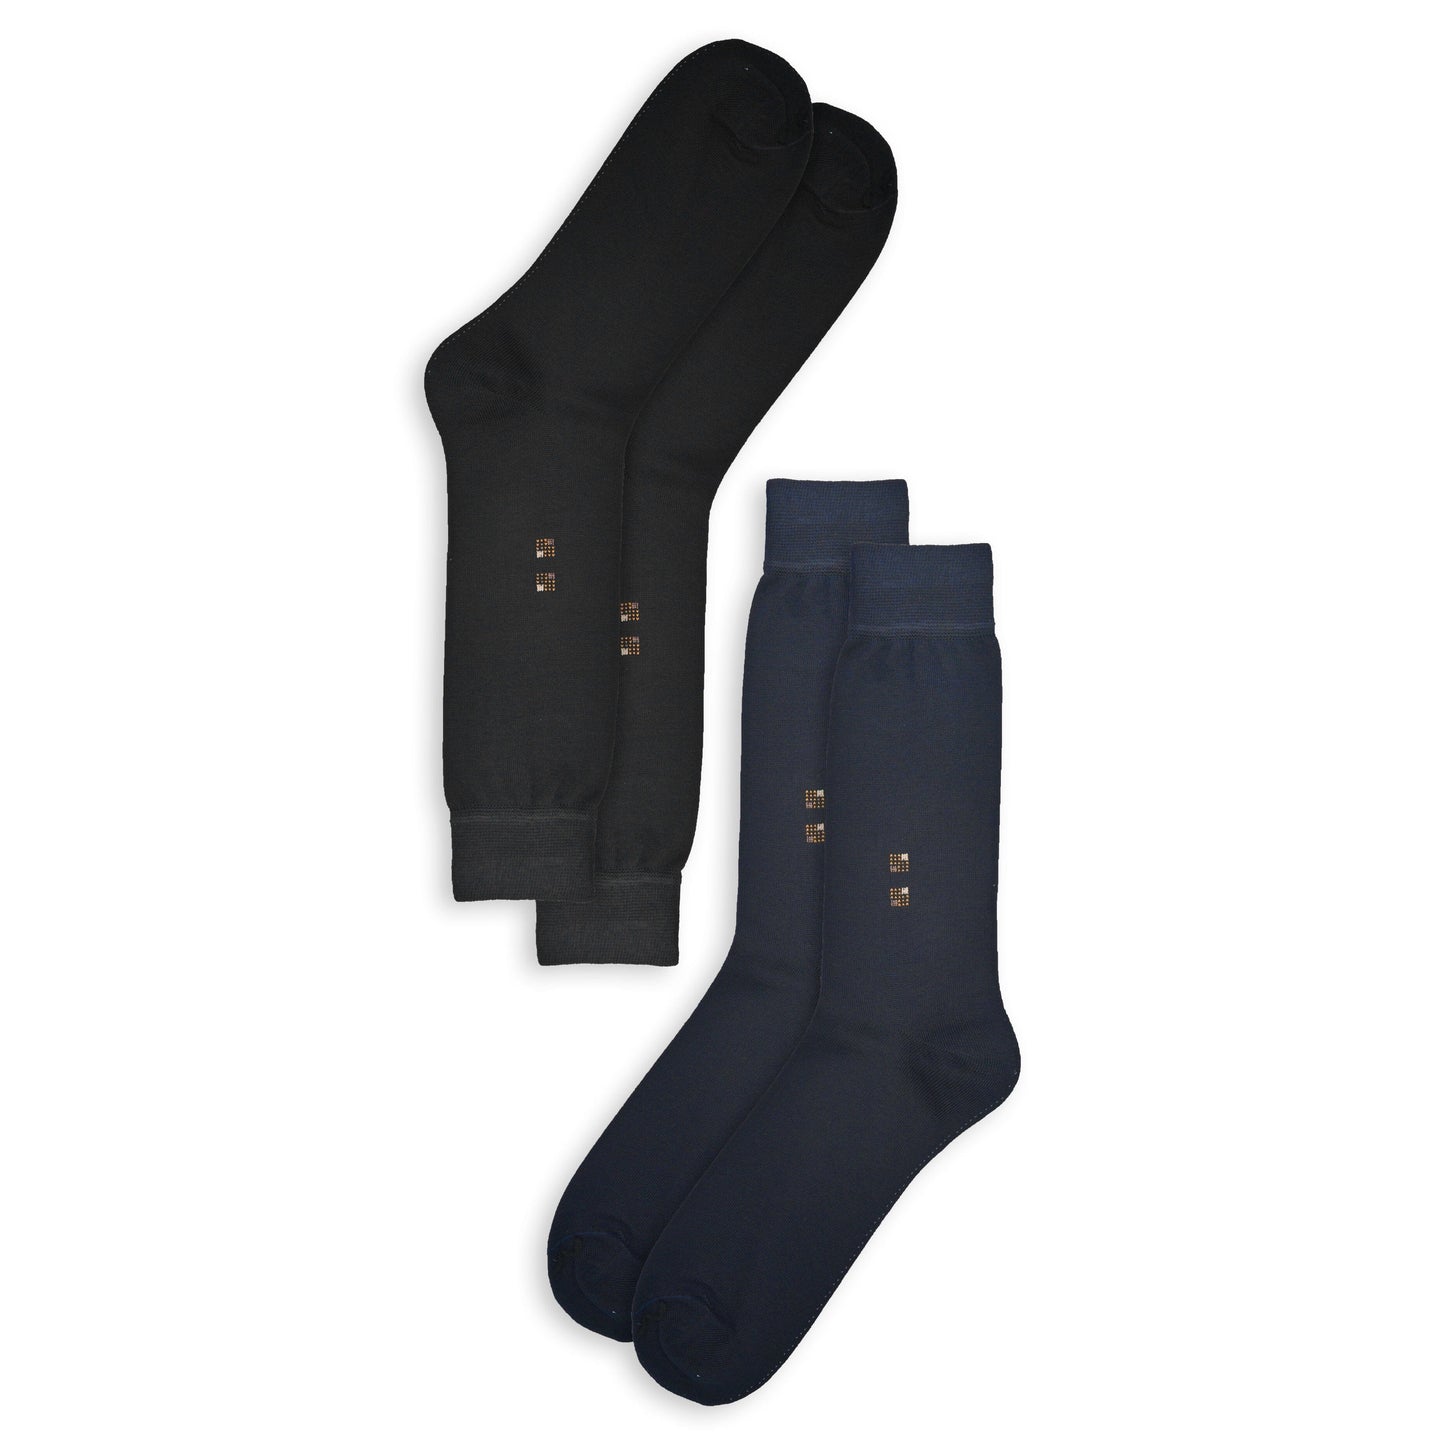 Gol Men's B&B Classic Cotton Dress Socks - Pack Of 2 Pairs Socks KHP EUR 40-44 